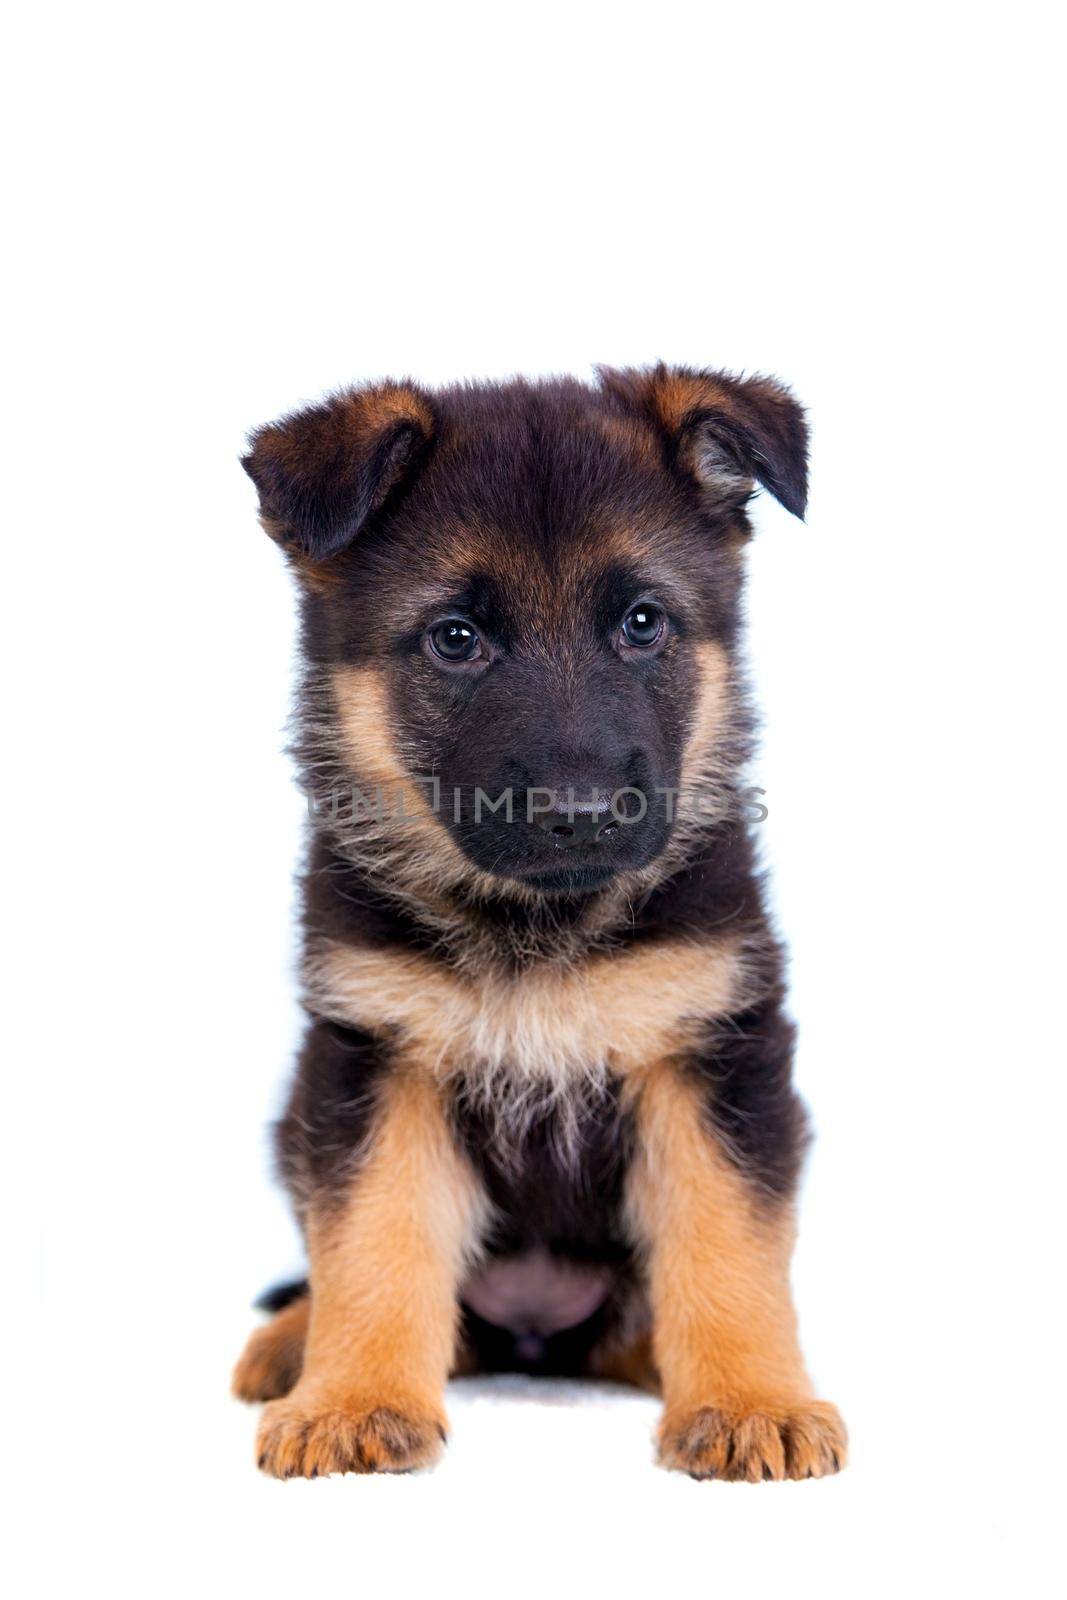 German shepherd puppy by RosaJay